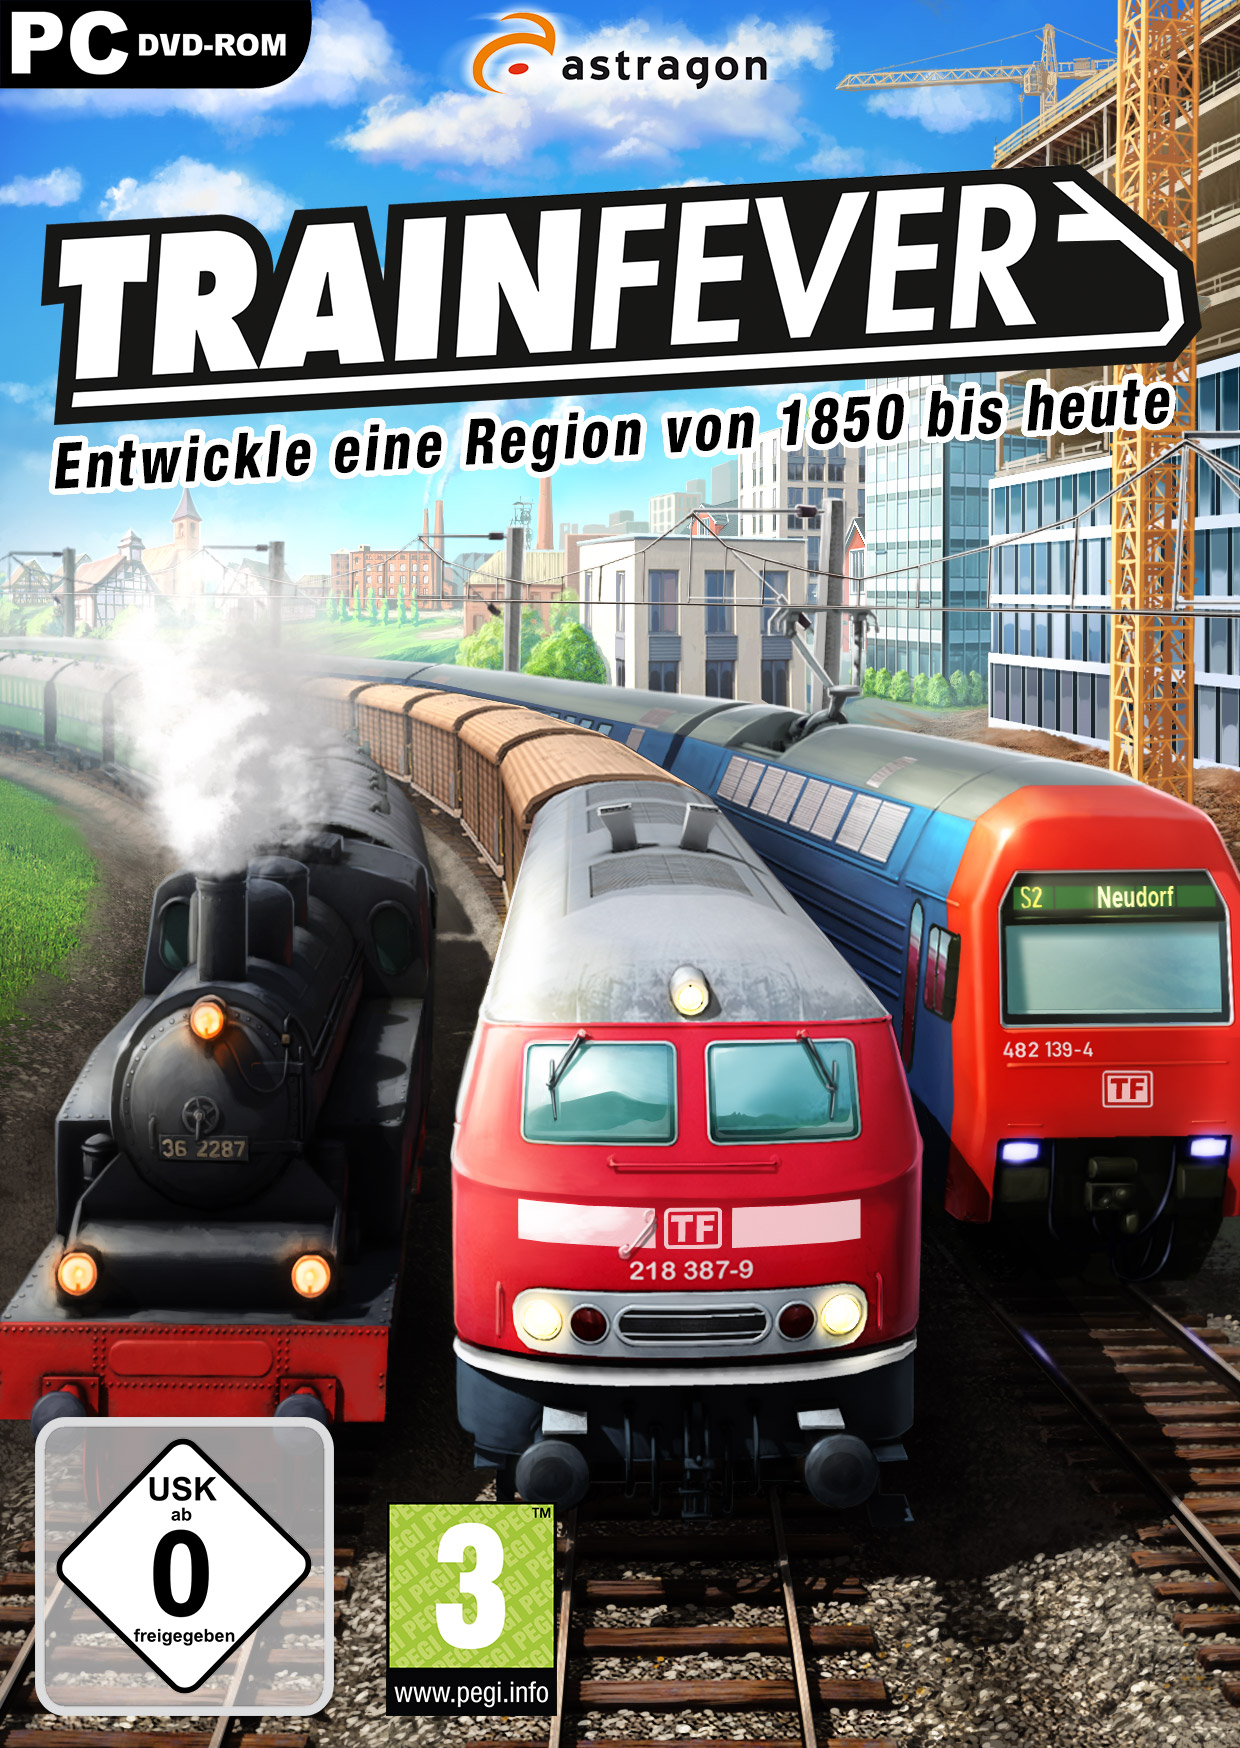 Train fever torrent download pc